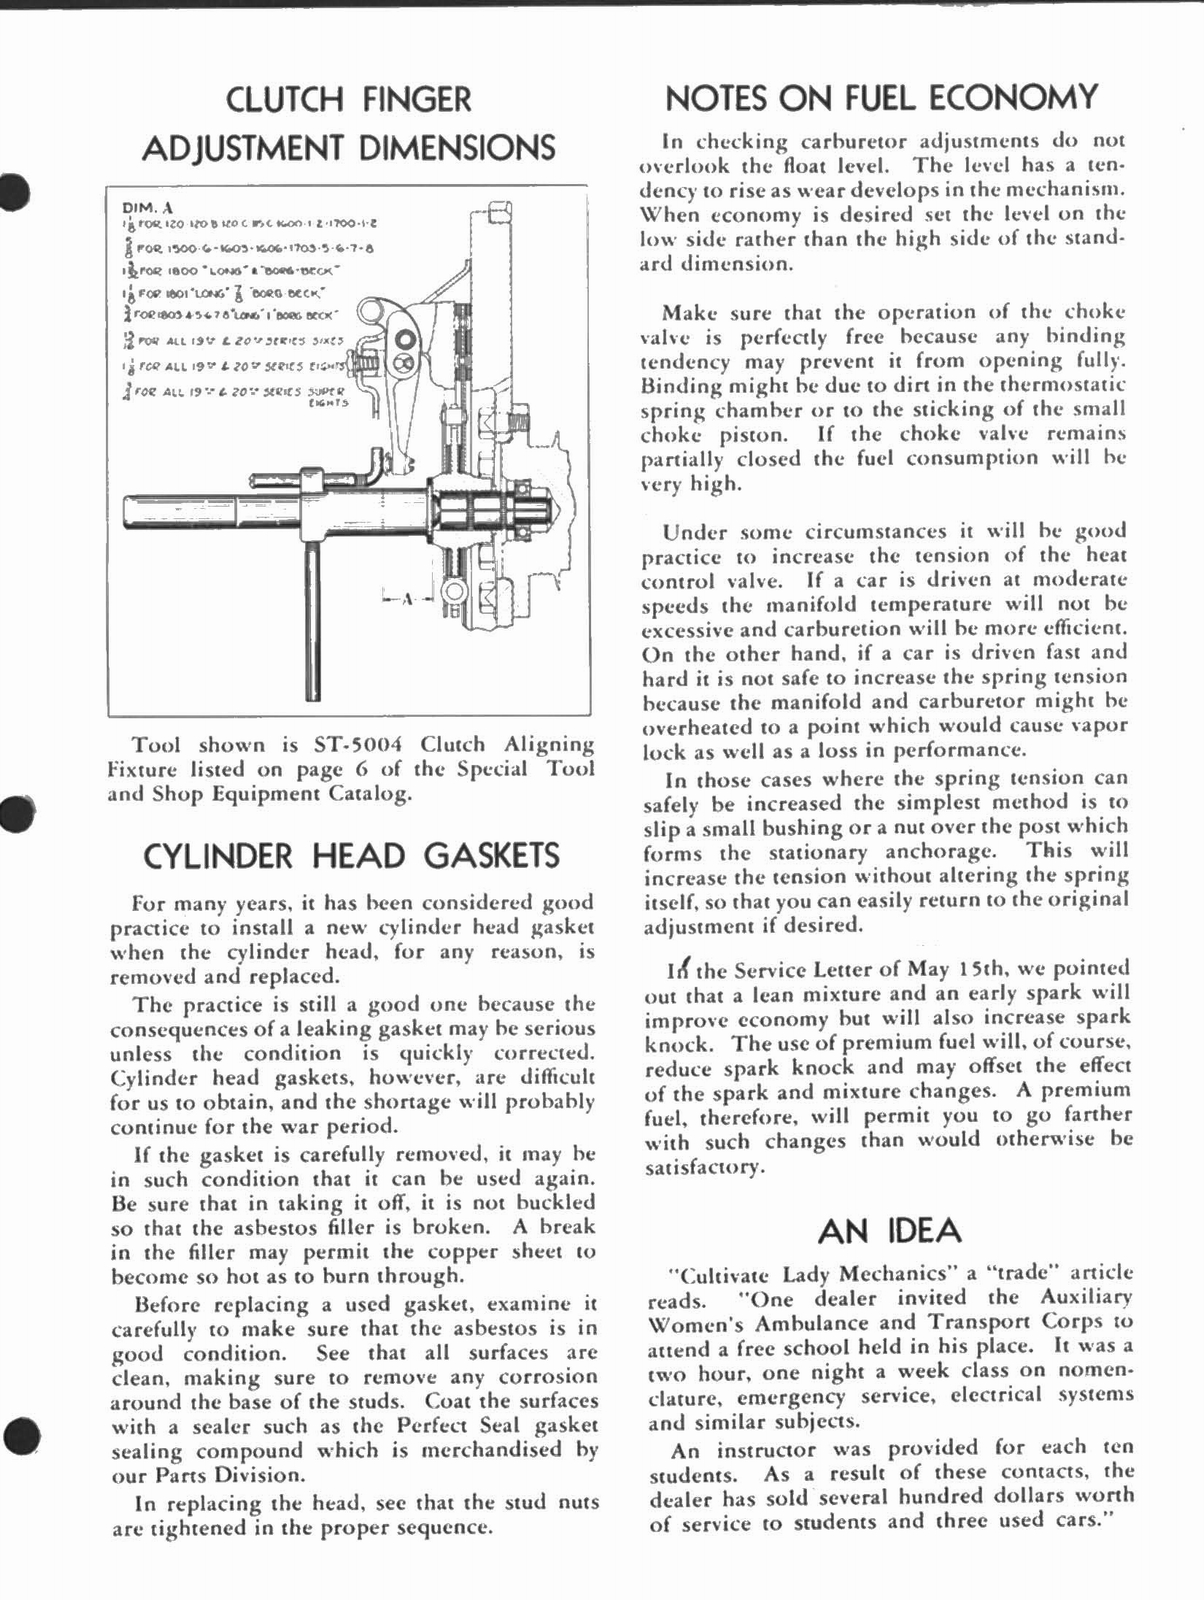 n_1942  Packard Service Letter-11-03.jpg